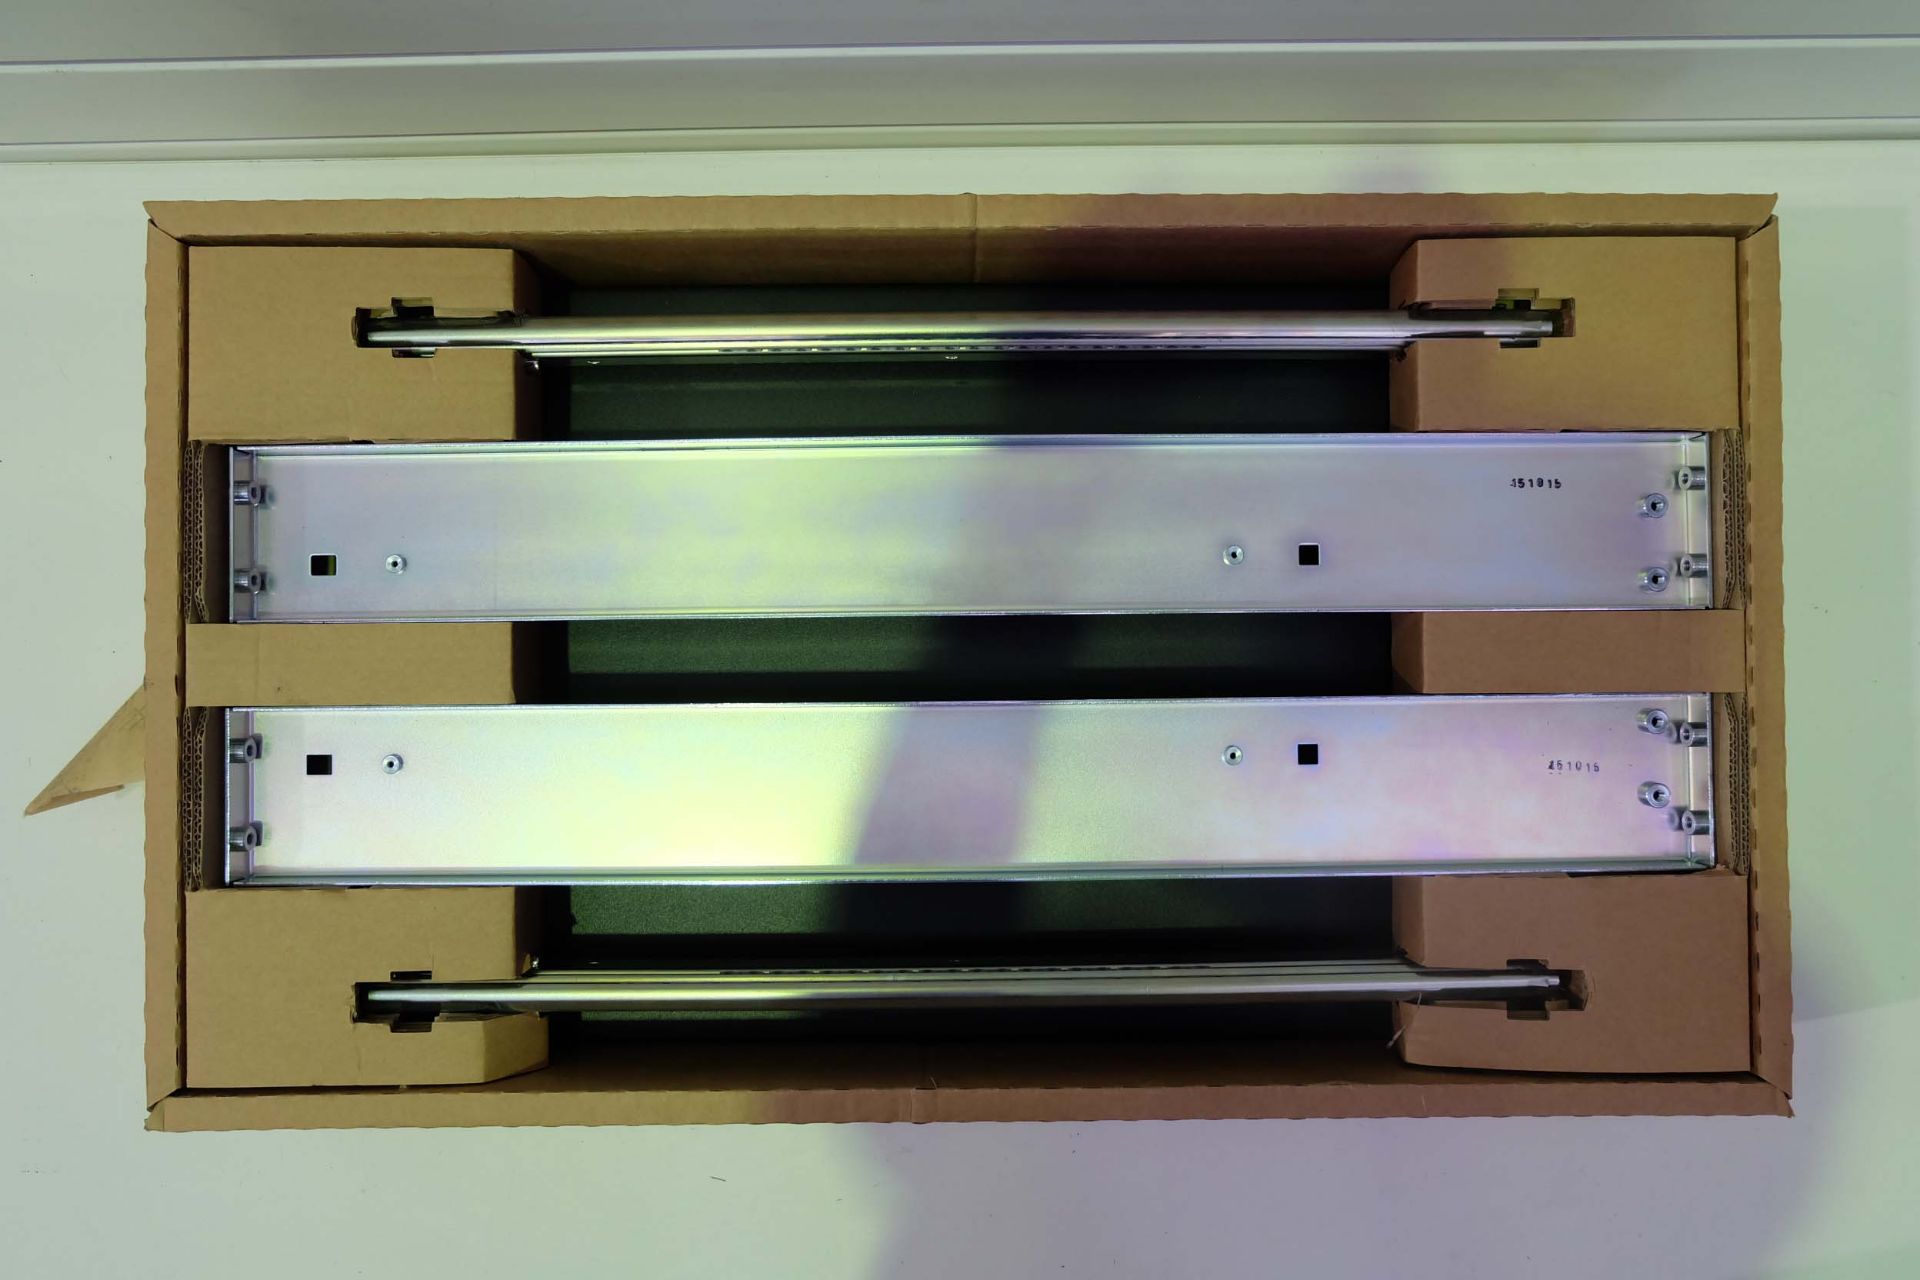 Hewlett Packard 100Kg Sliding Shelf Kit Width 500mm. Length 600mm. As New In Box. - Image 3 of 6